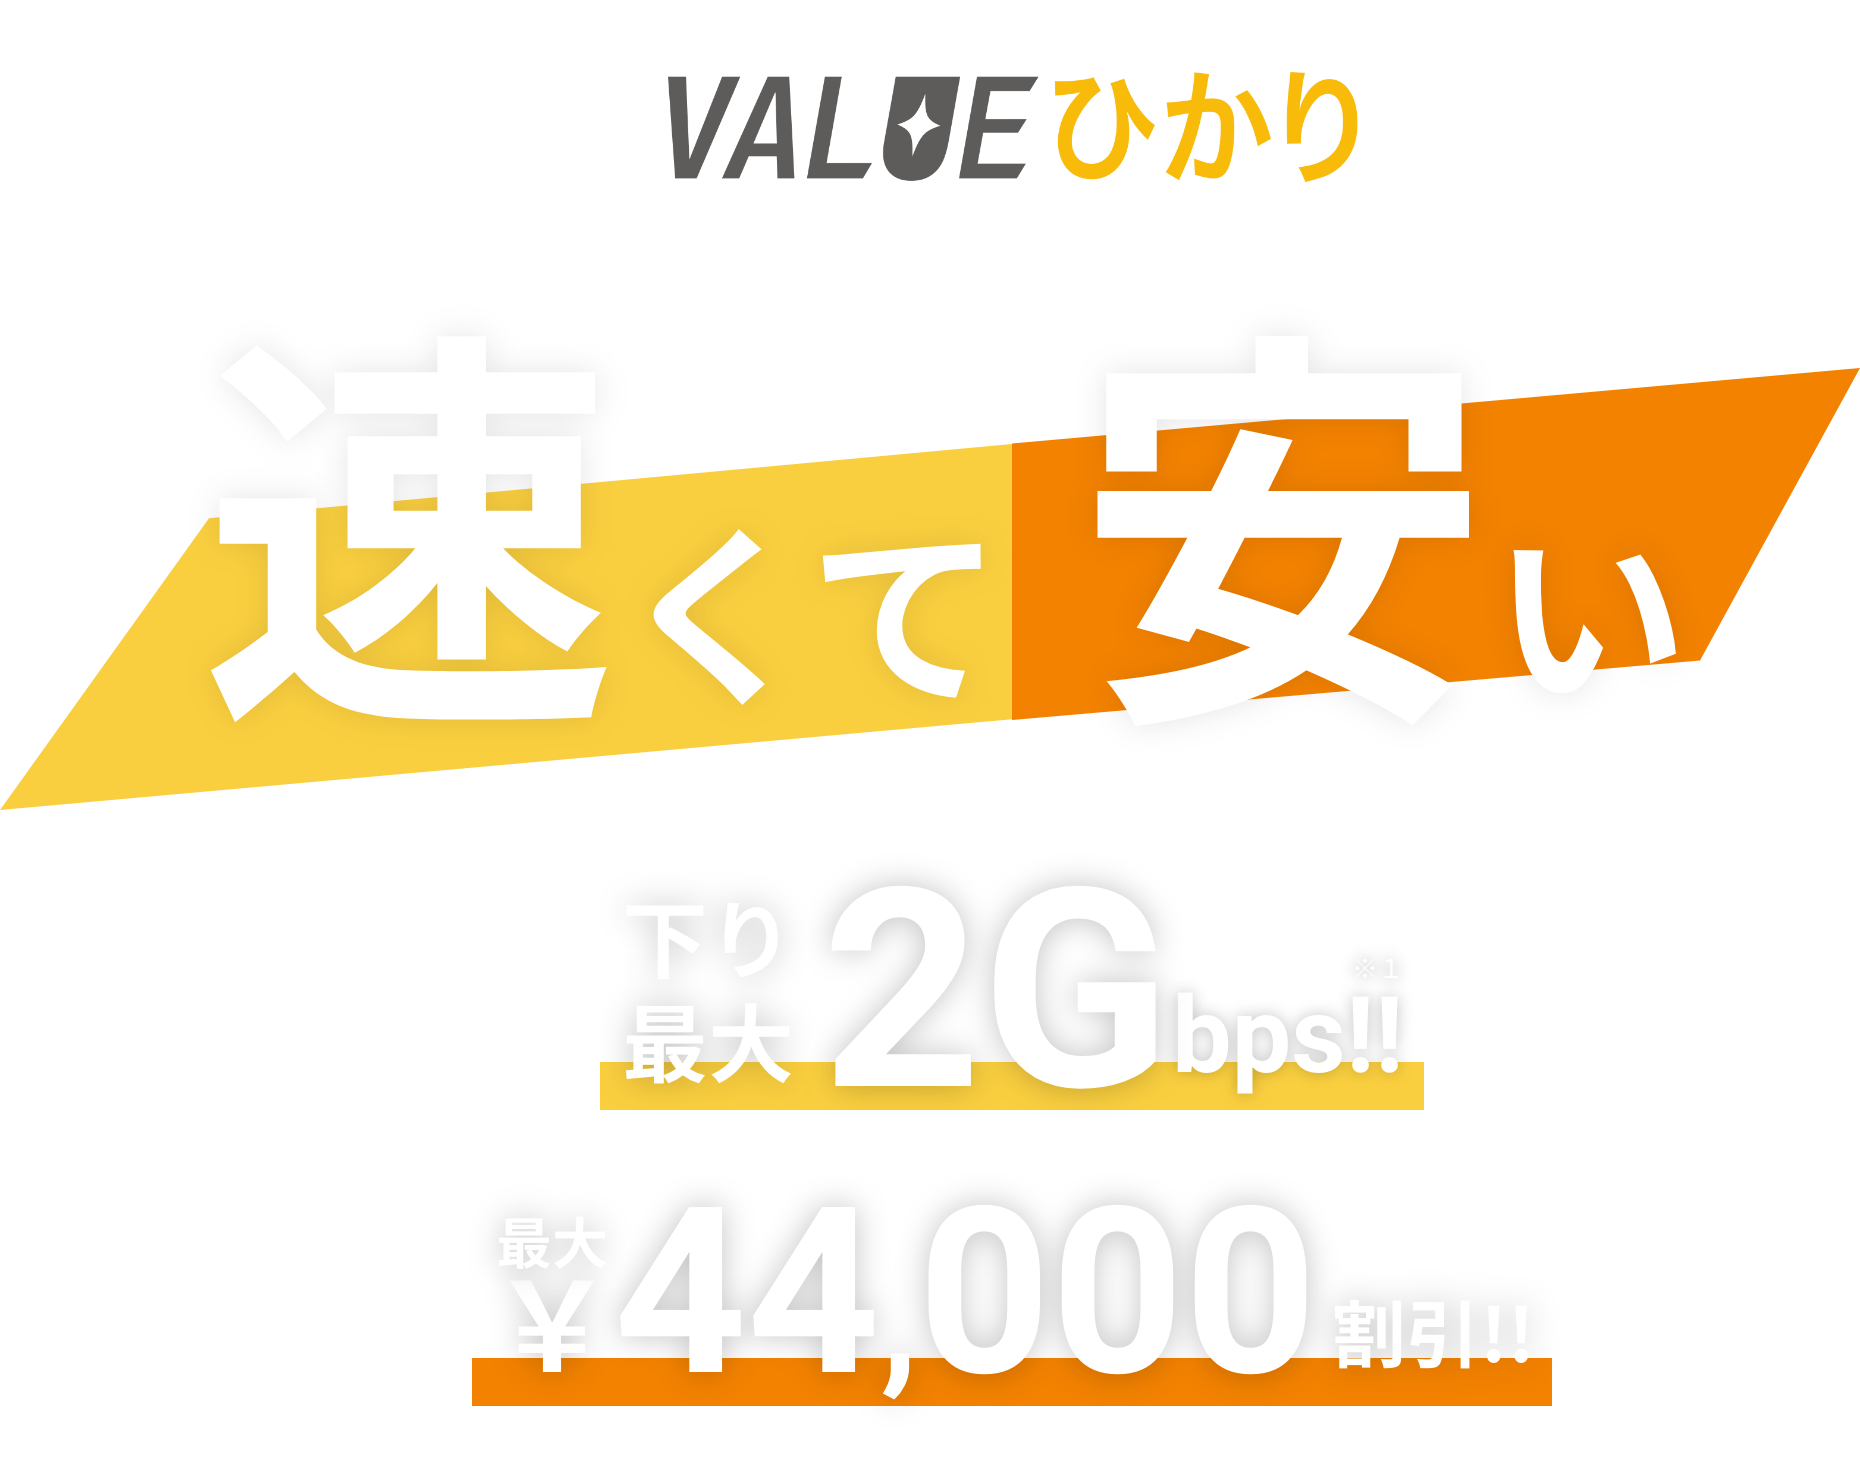 VALUEひかり 速くて安い下り2Gbps 最大¥44,000割引